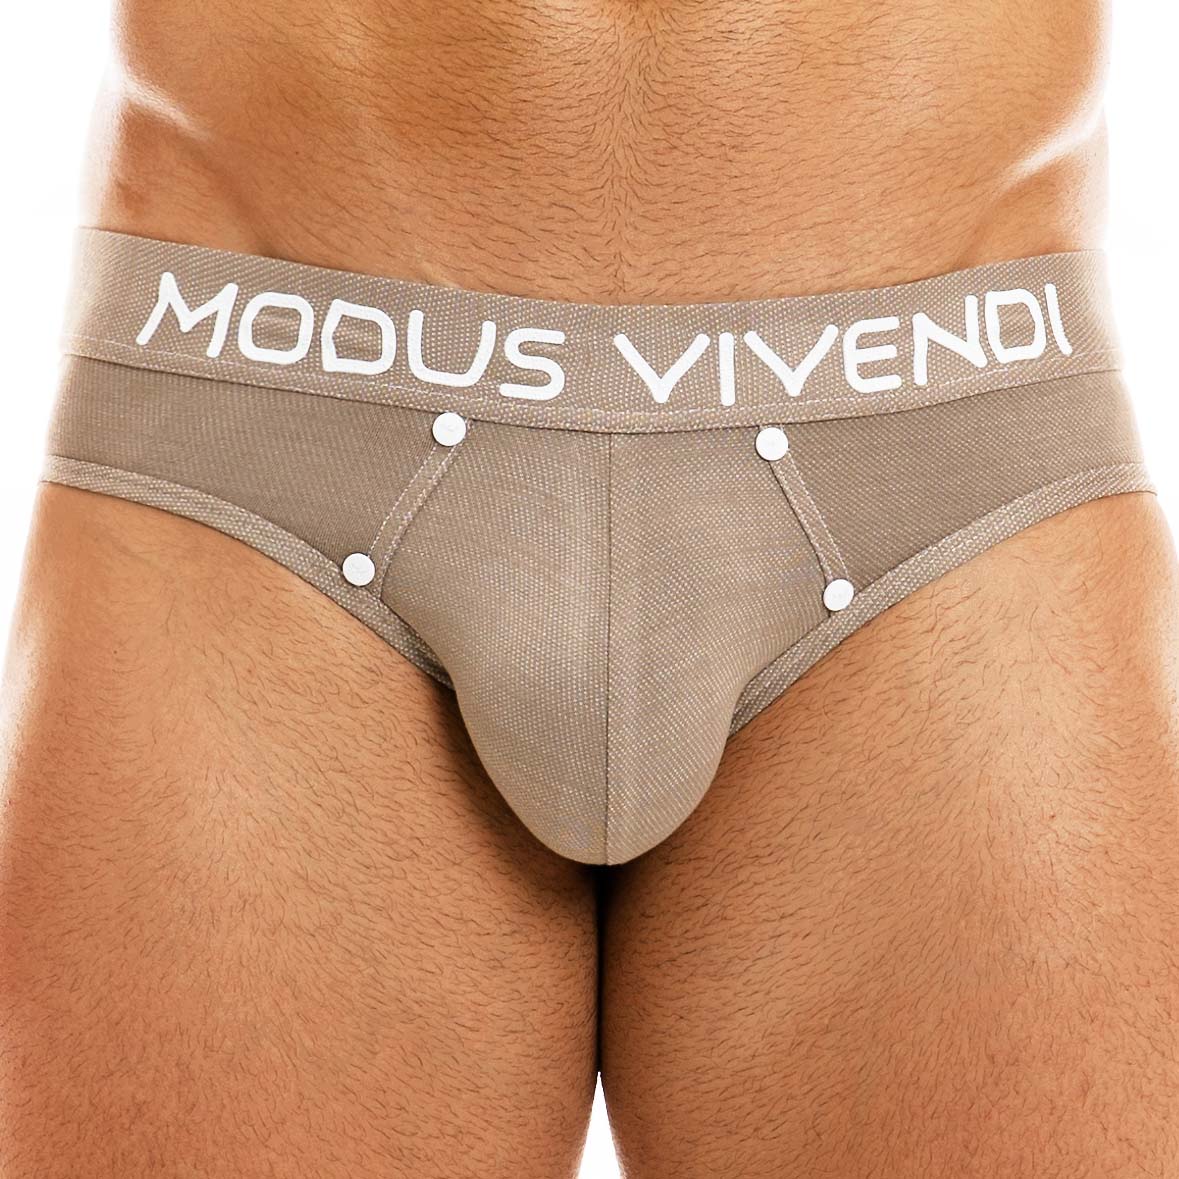 Brief Modus Vivendi Jeans 05013